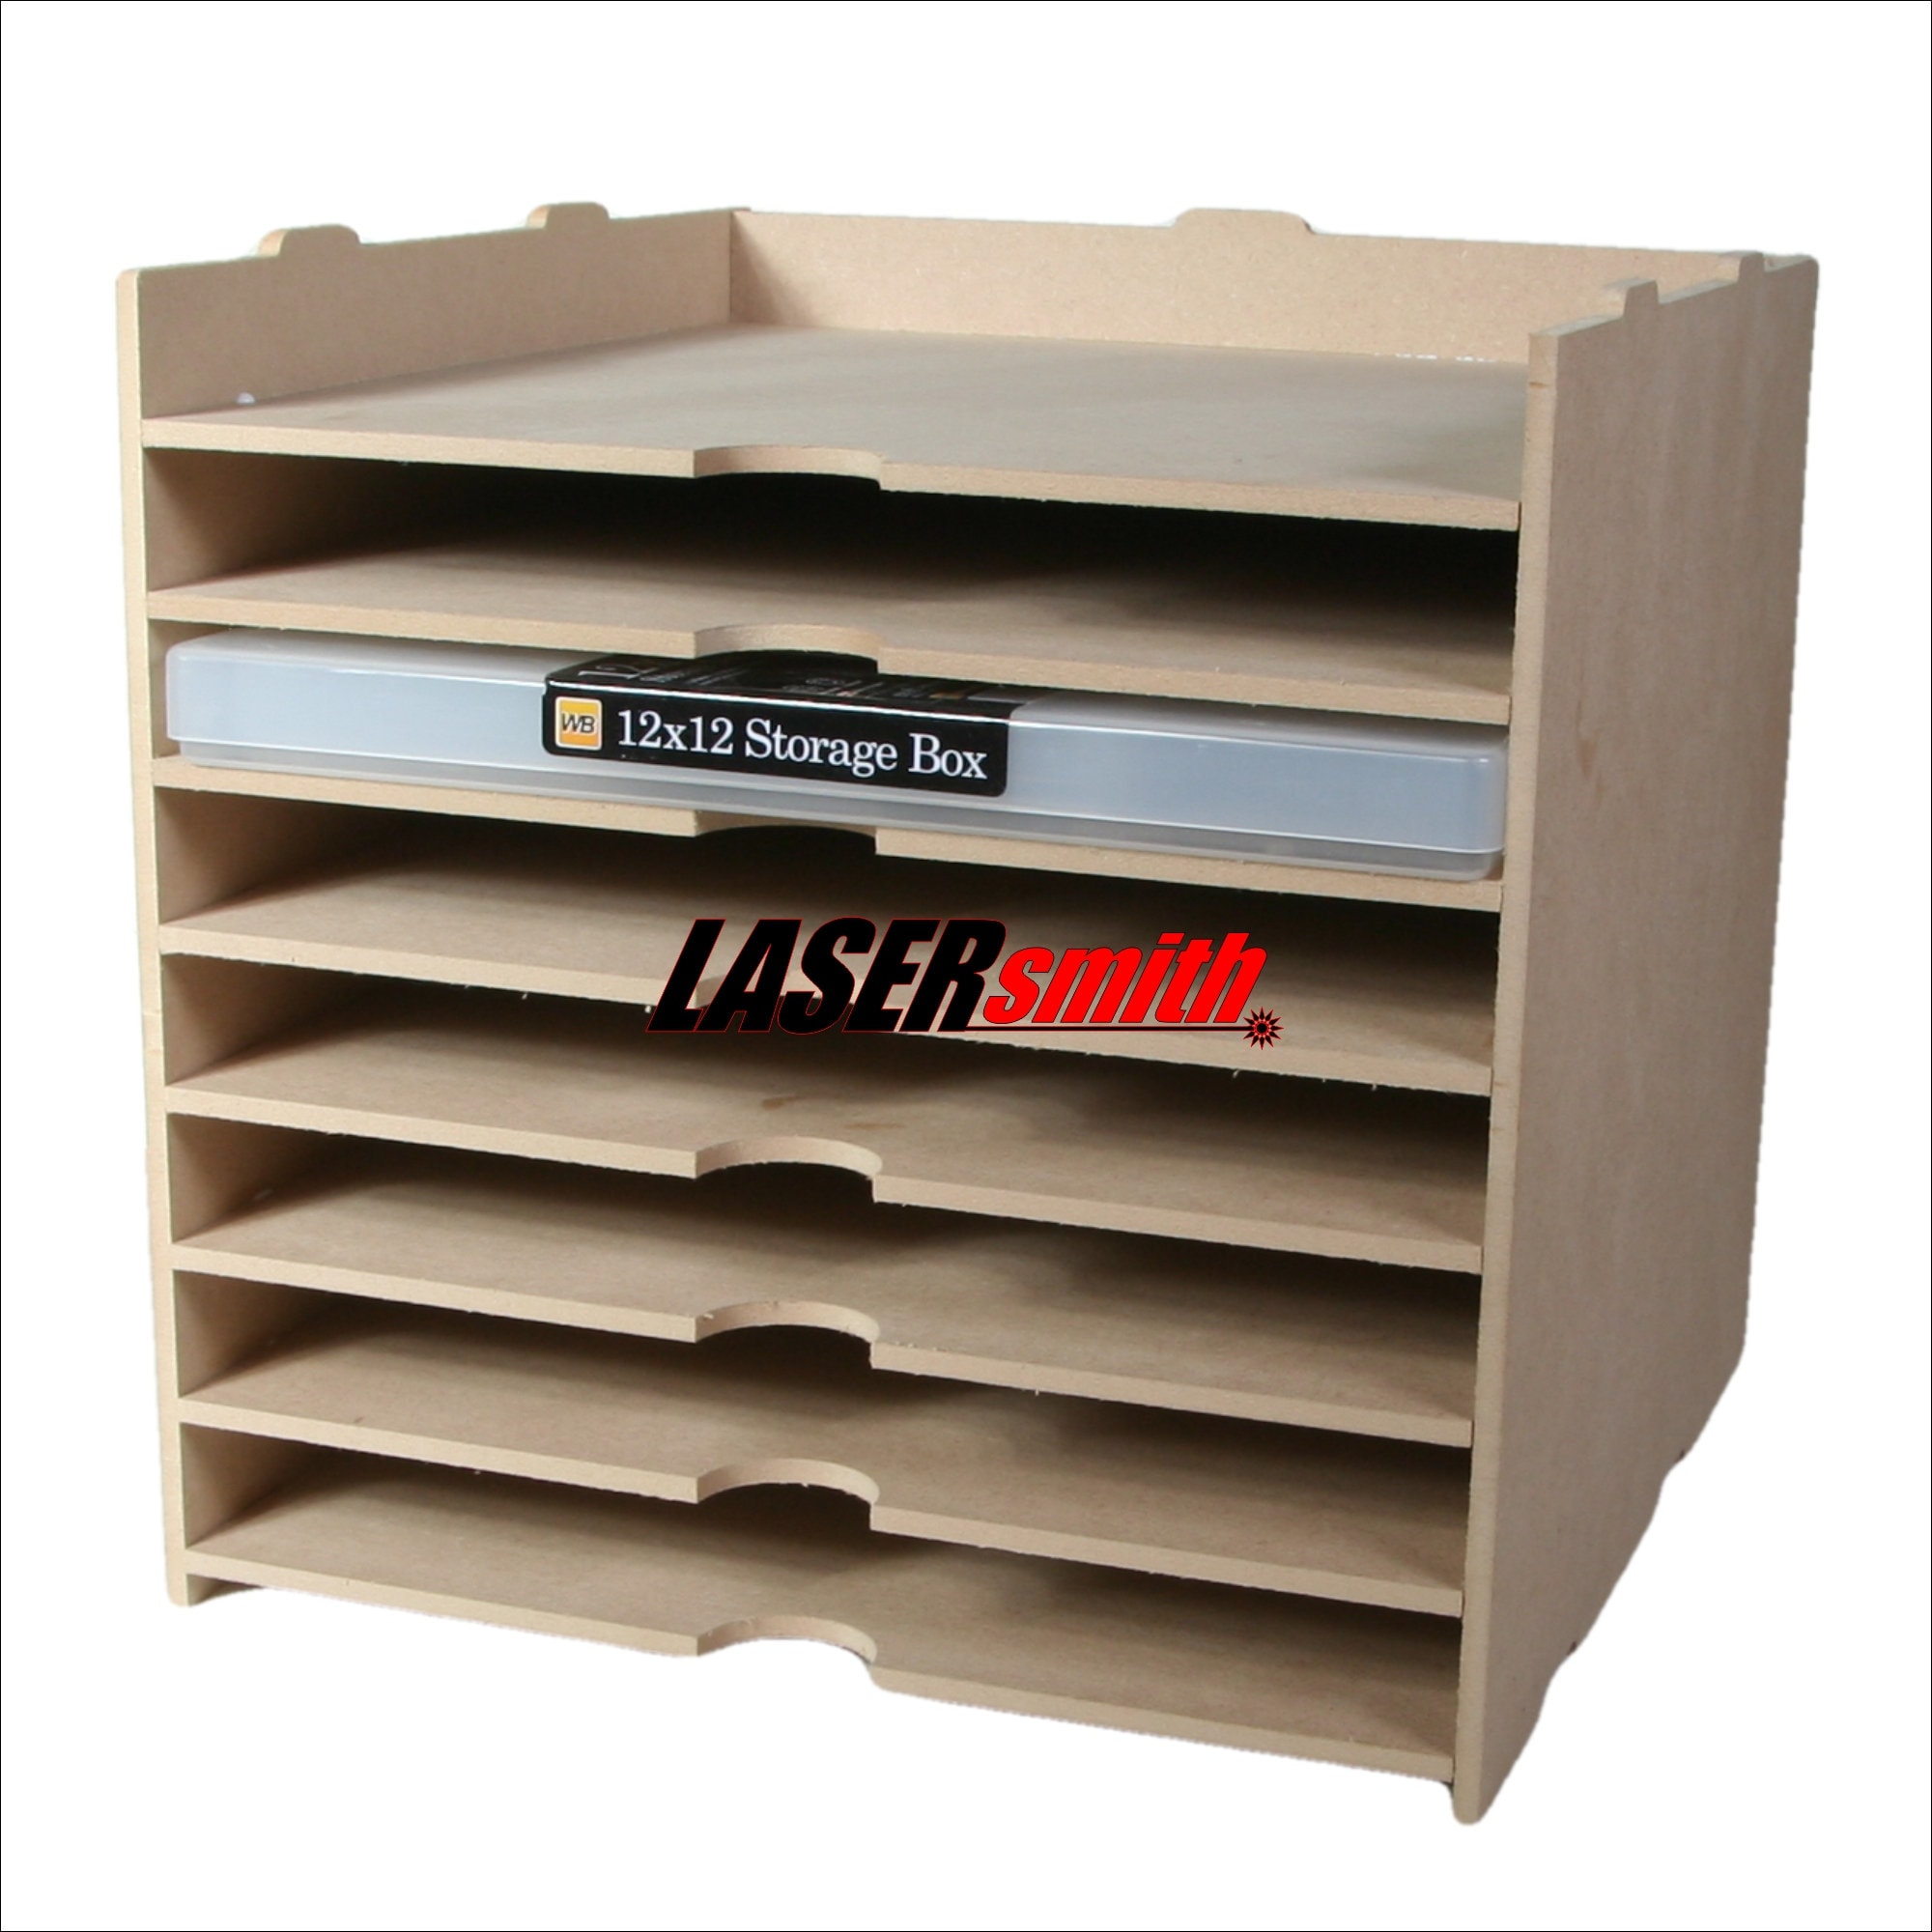  Stamp-n-Storage Paper Holder for 12x12 Paper - 12 Slot (fits  IKEA Kallax Shelf)